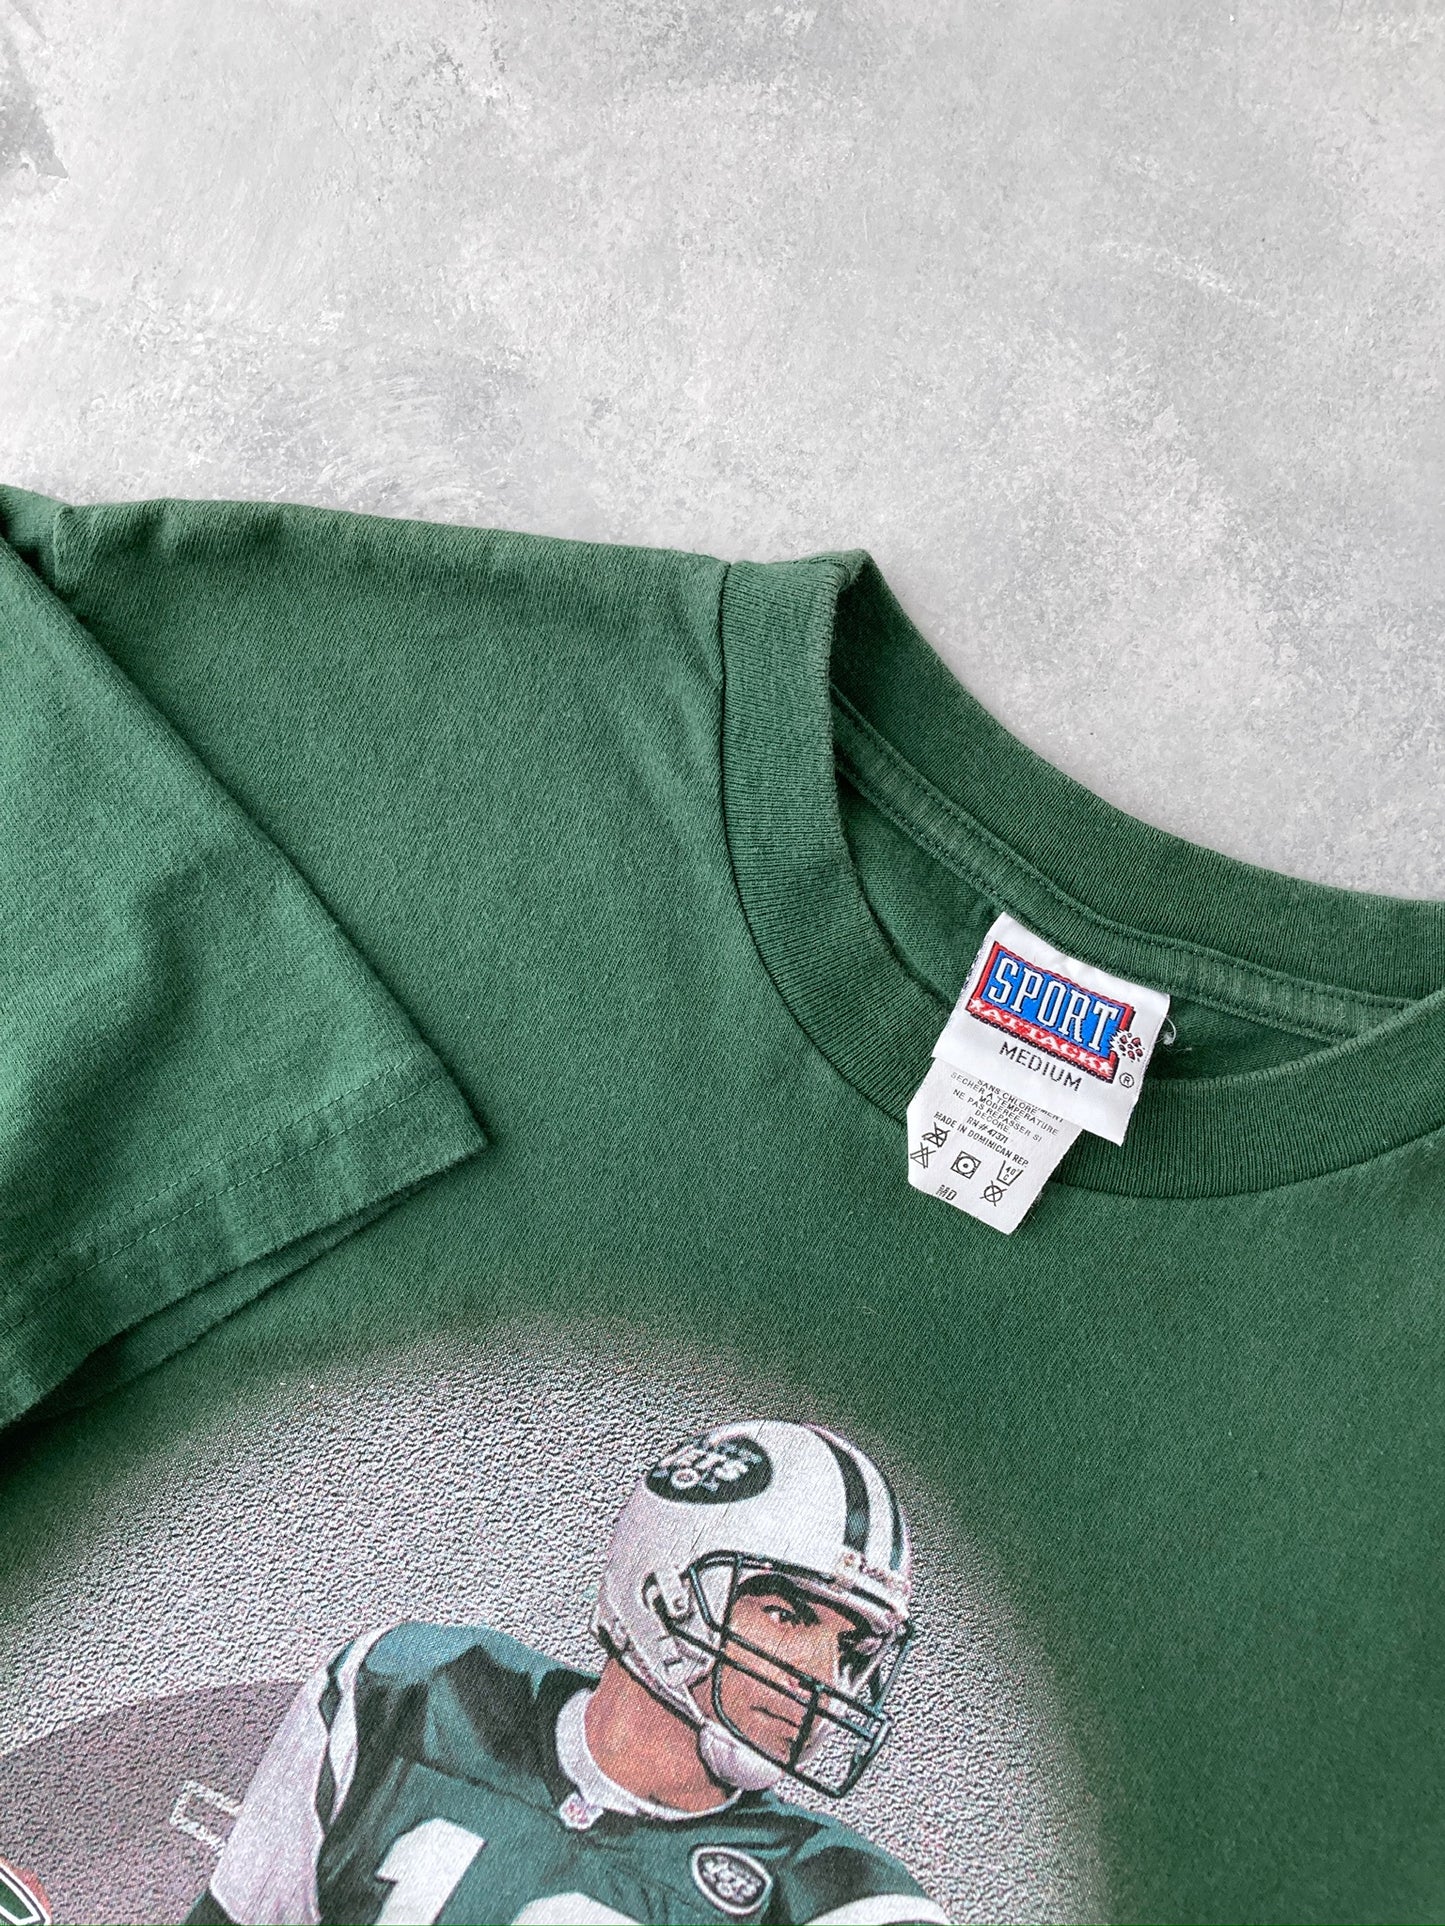 New York Jets T-Shirt '99 - Medium